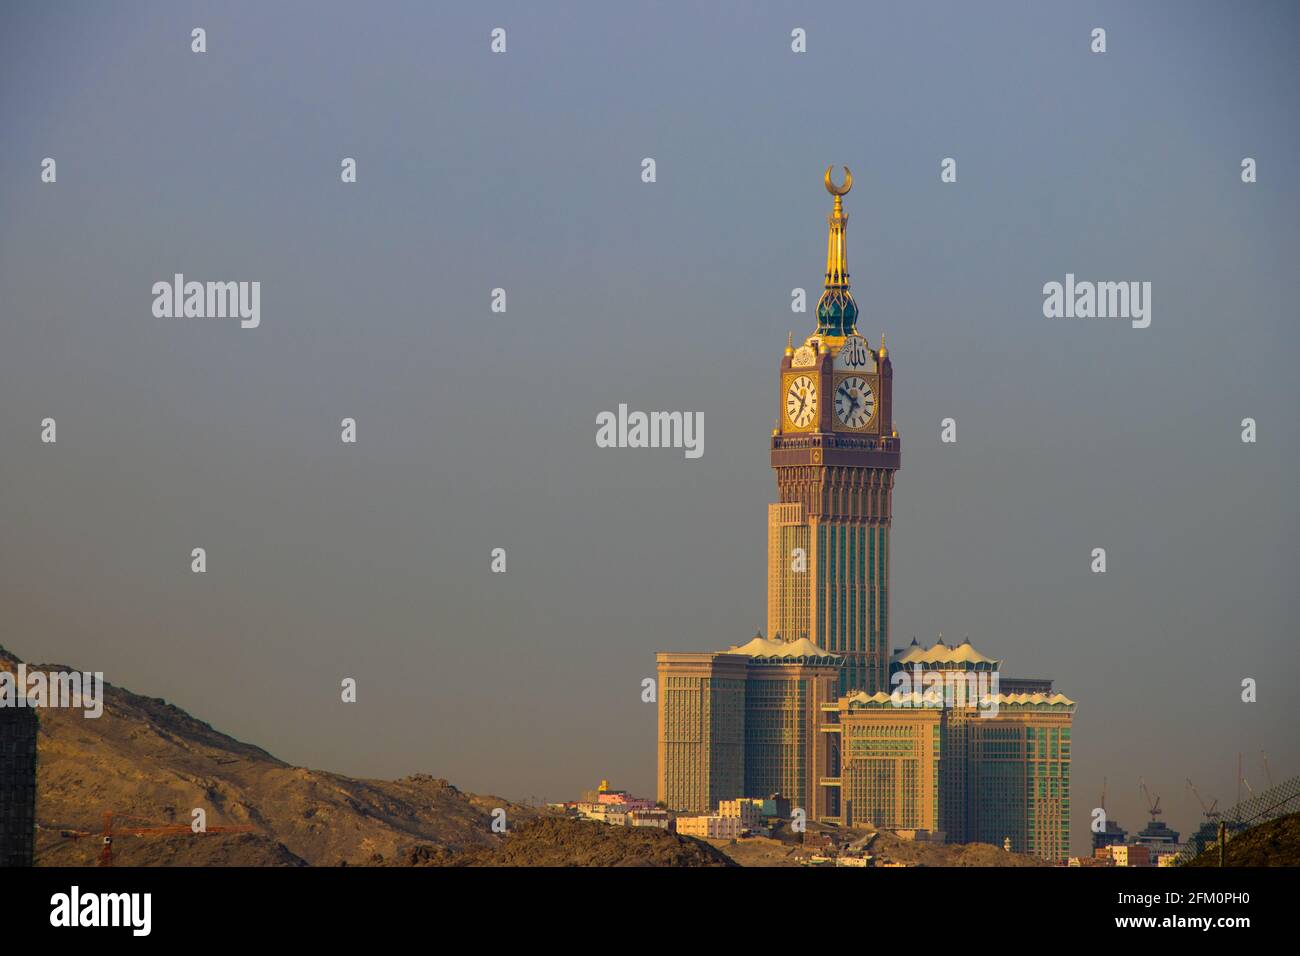 Mecca Clock Tower. Skyline with Abraj Al Bait. Saudi Arabia Stock Photo